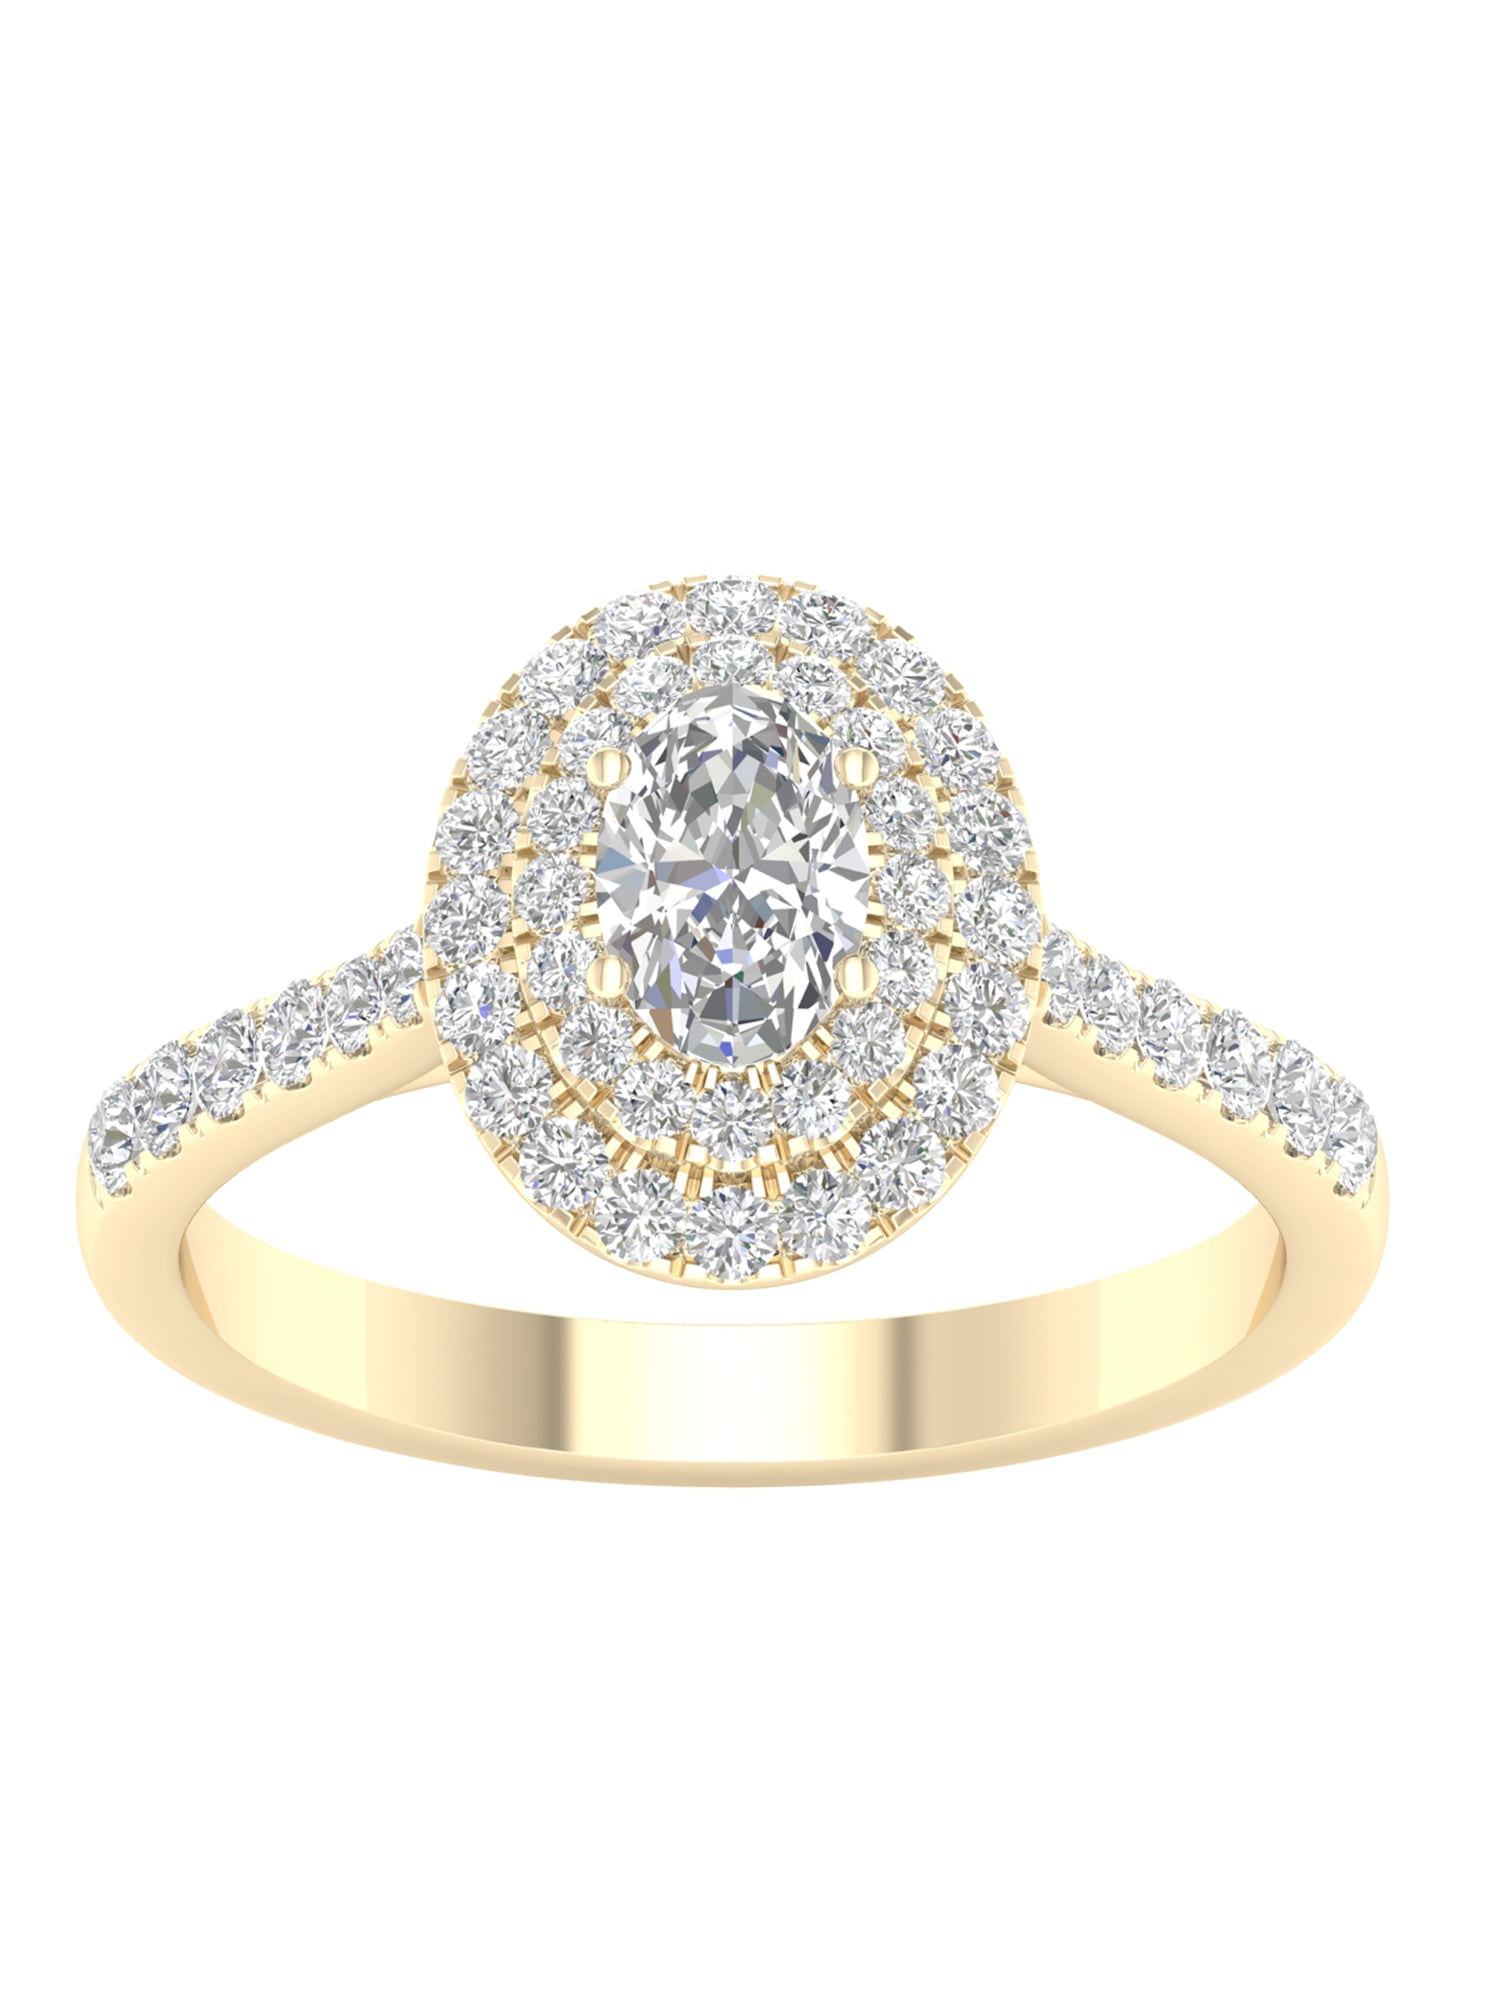 1/2 Carat Double Halo Diamond Ring in 10K Gold 